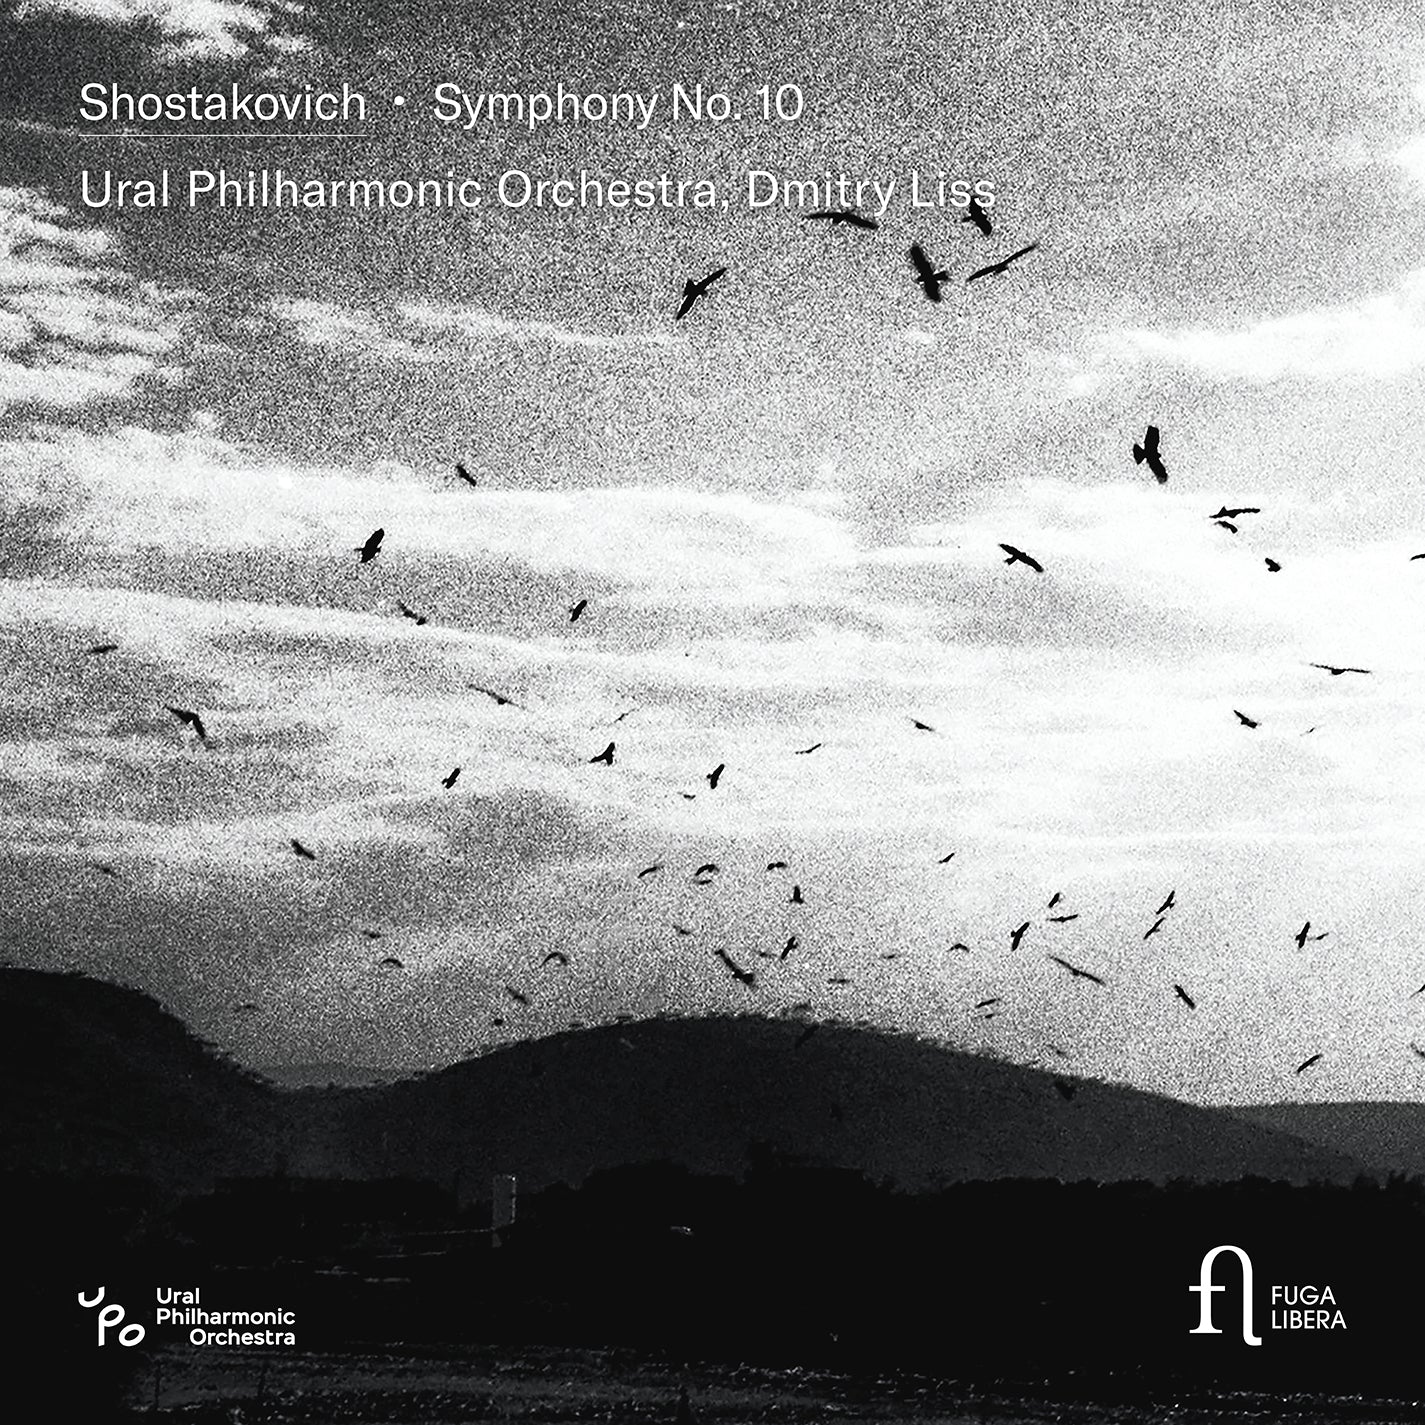 Shostakovich: Symphony No. 10 / Liss, Ural Philharmonic Orchestra